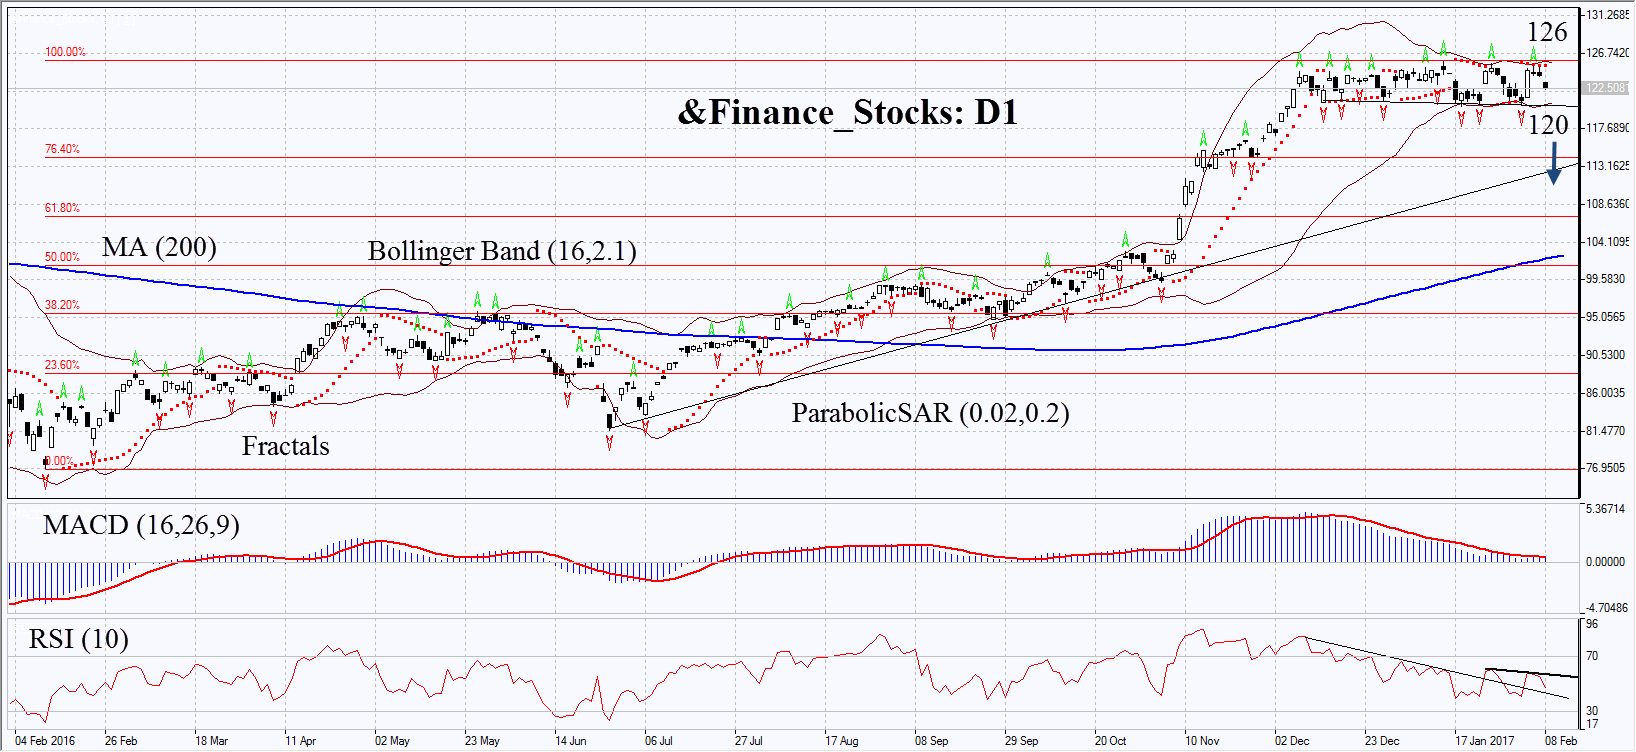 &Finance Stocks Daily Chart